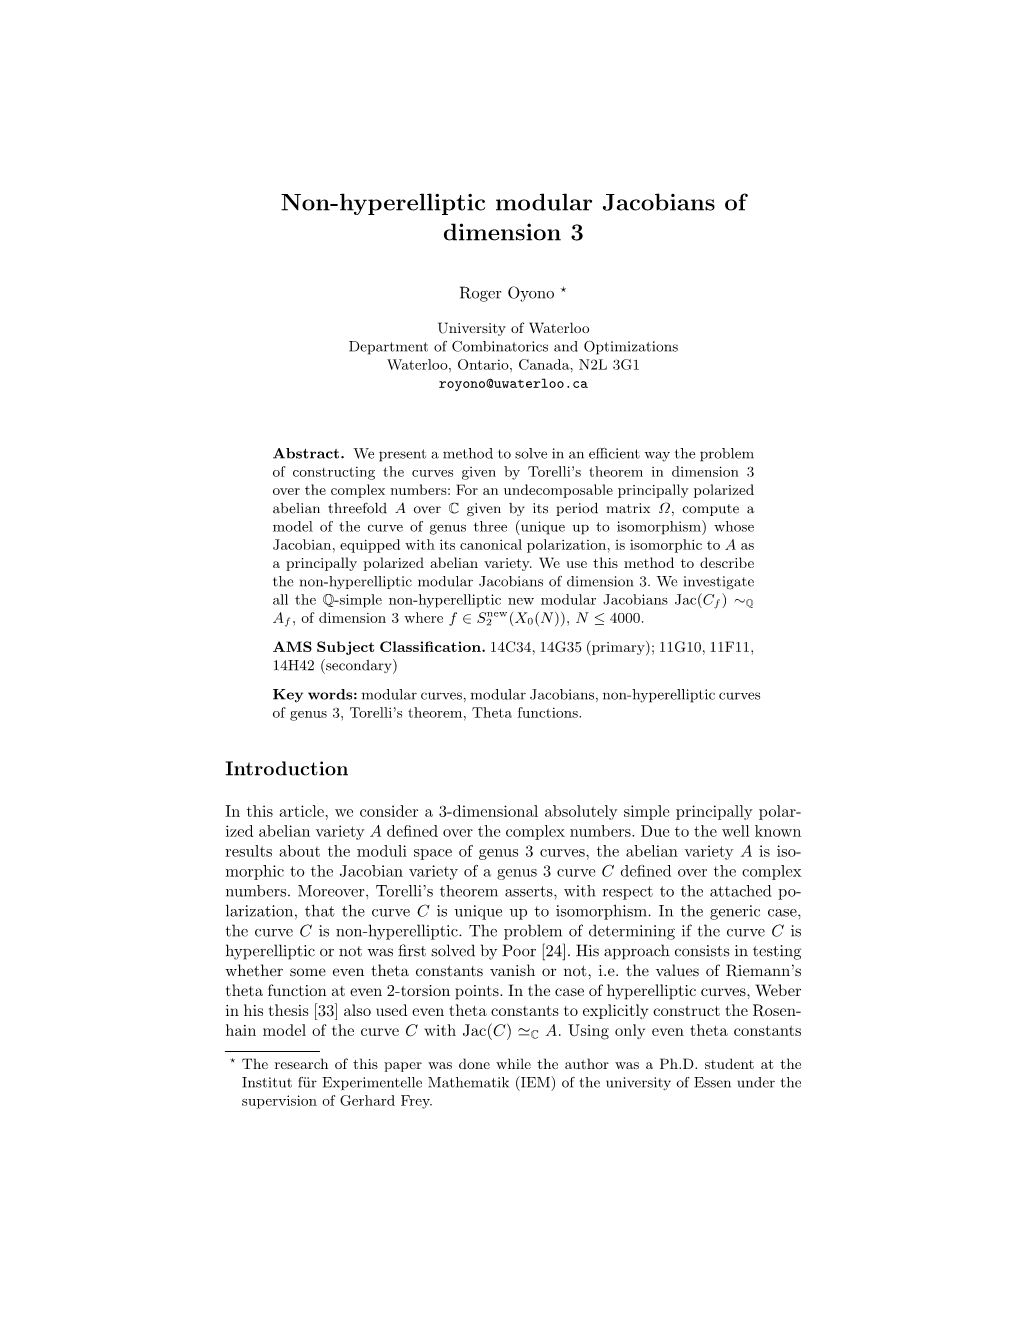 Non-Hyperelliptic Modular Jacobians of Dimension 3